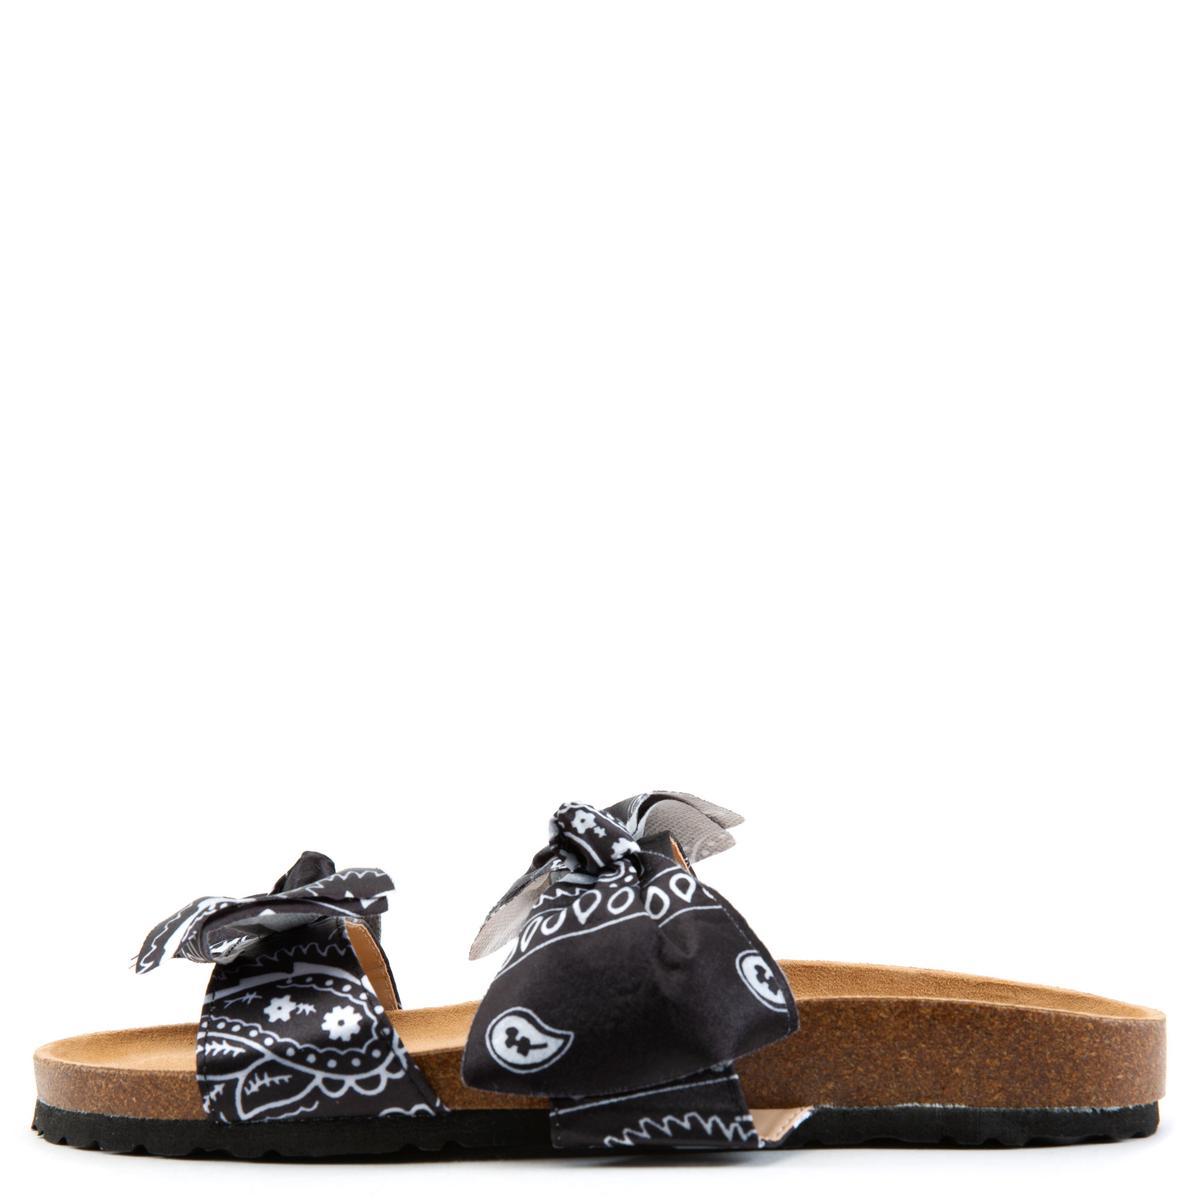 Broadwalk-9 Sandals